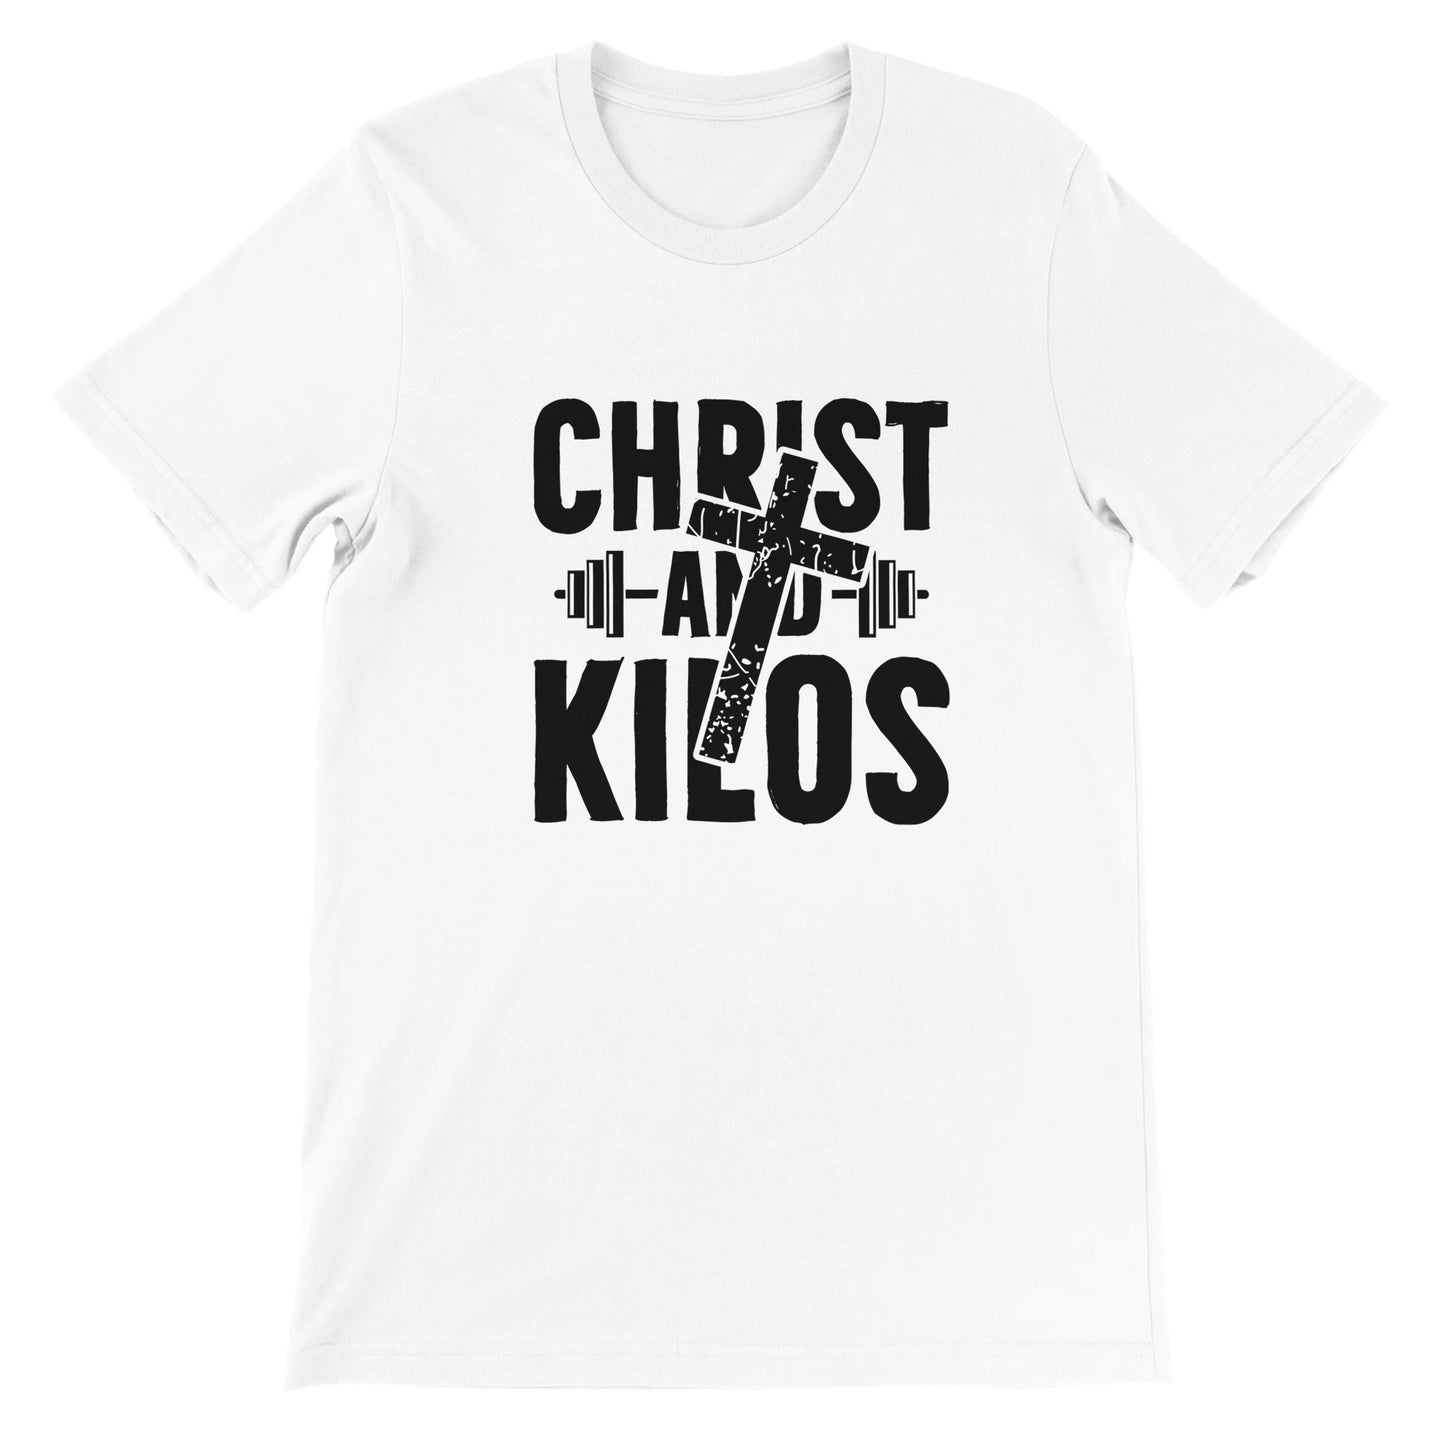 "Christ and Kilos" Premium Christian Crewneck T-shirt